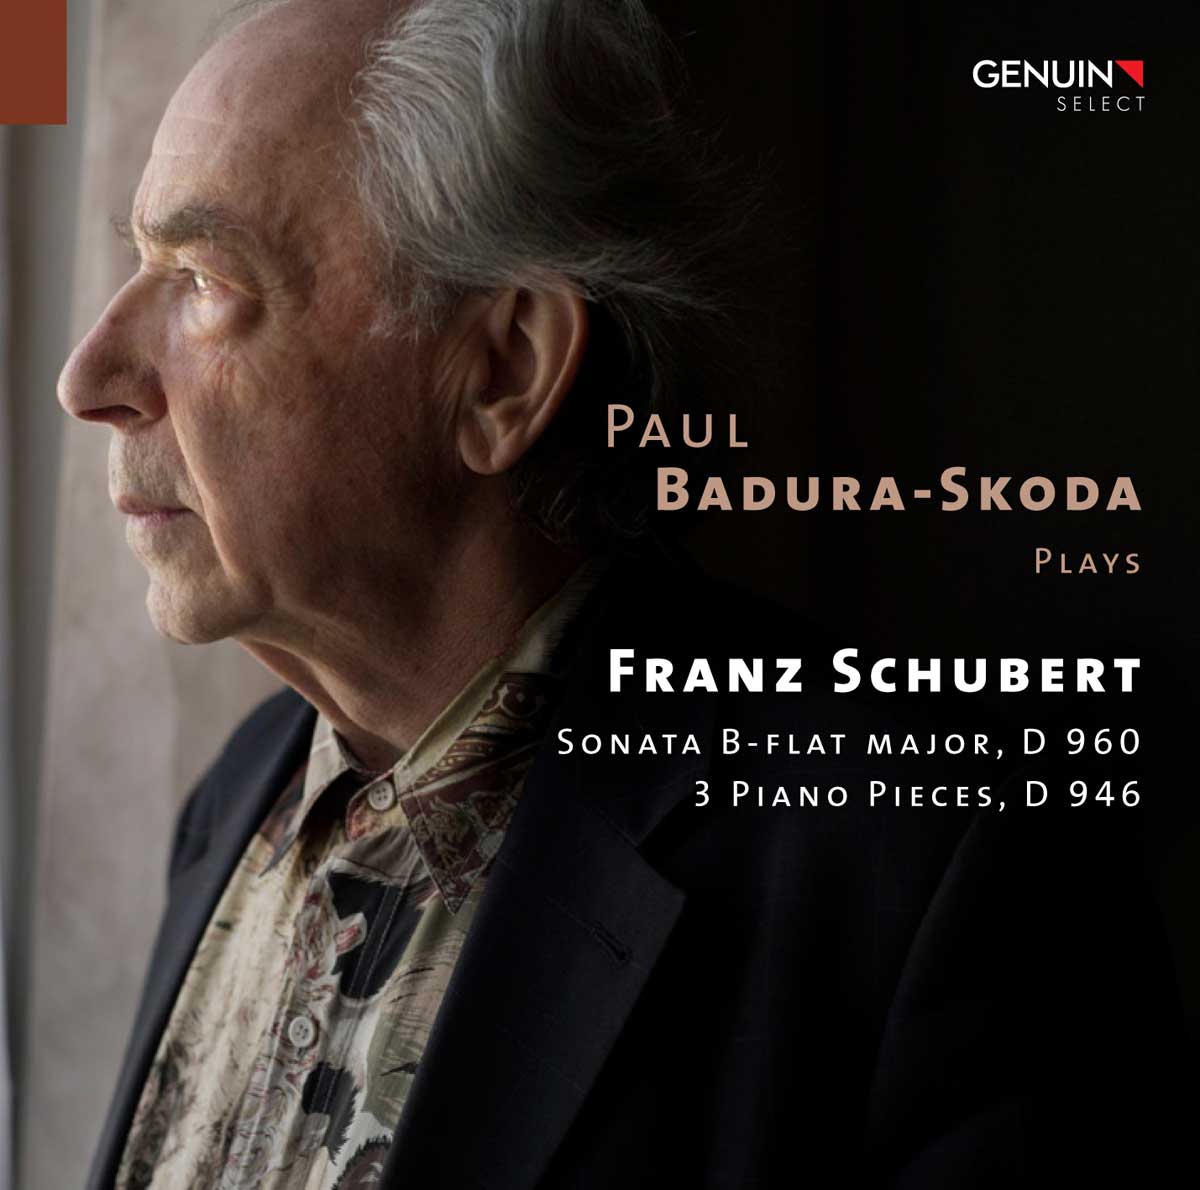 CD album cover 'Paul Badura-Skoda plays Franz Schubert' (GEN 12251) with Paul Badura-Skoda